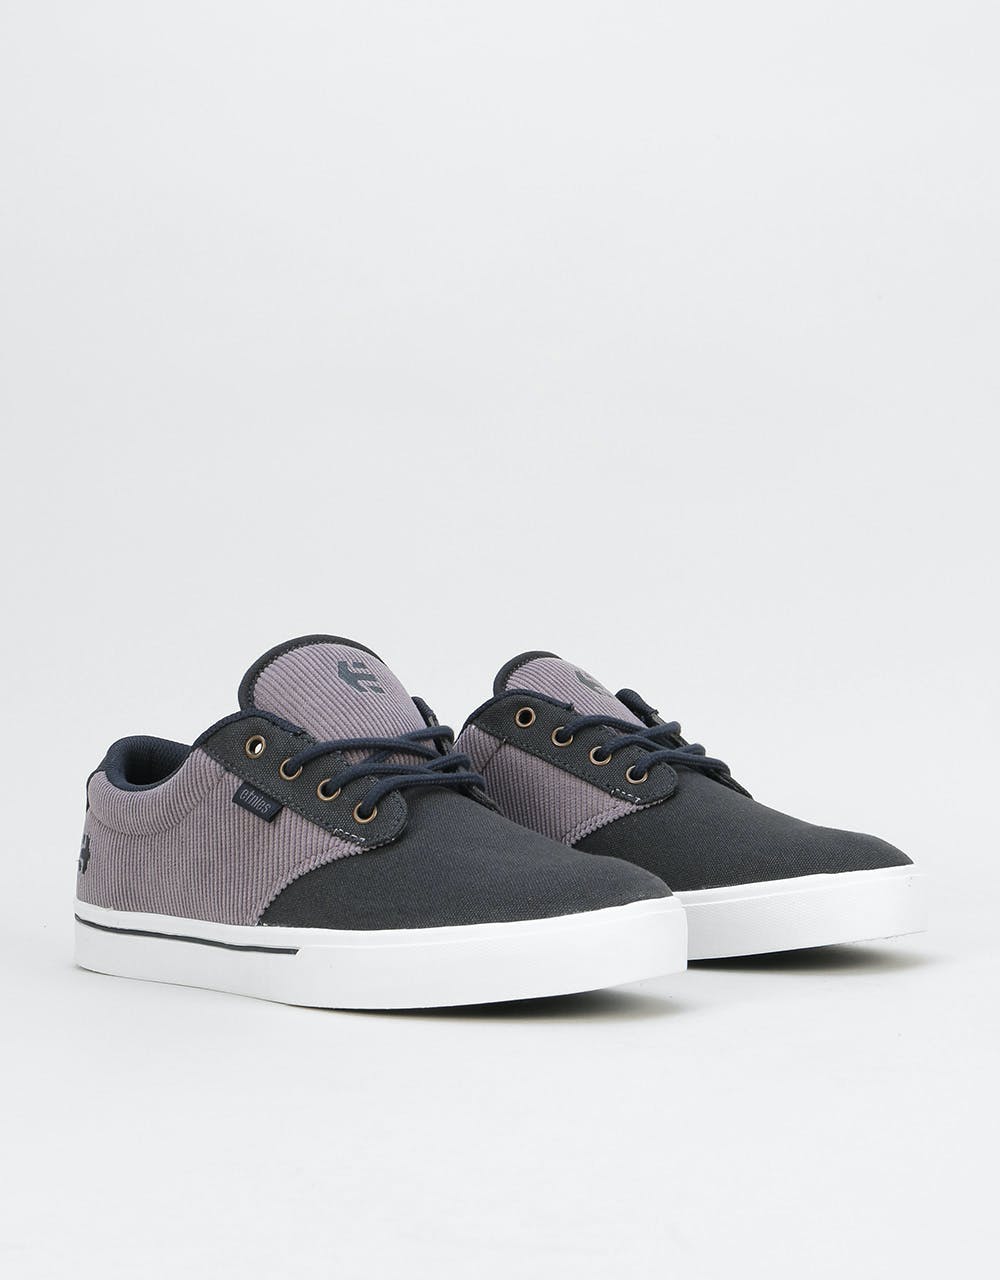 Etnies Jameson 2 Eco Skate Shoes - Navy/Grey/Gold